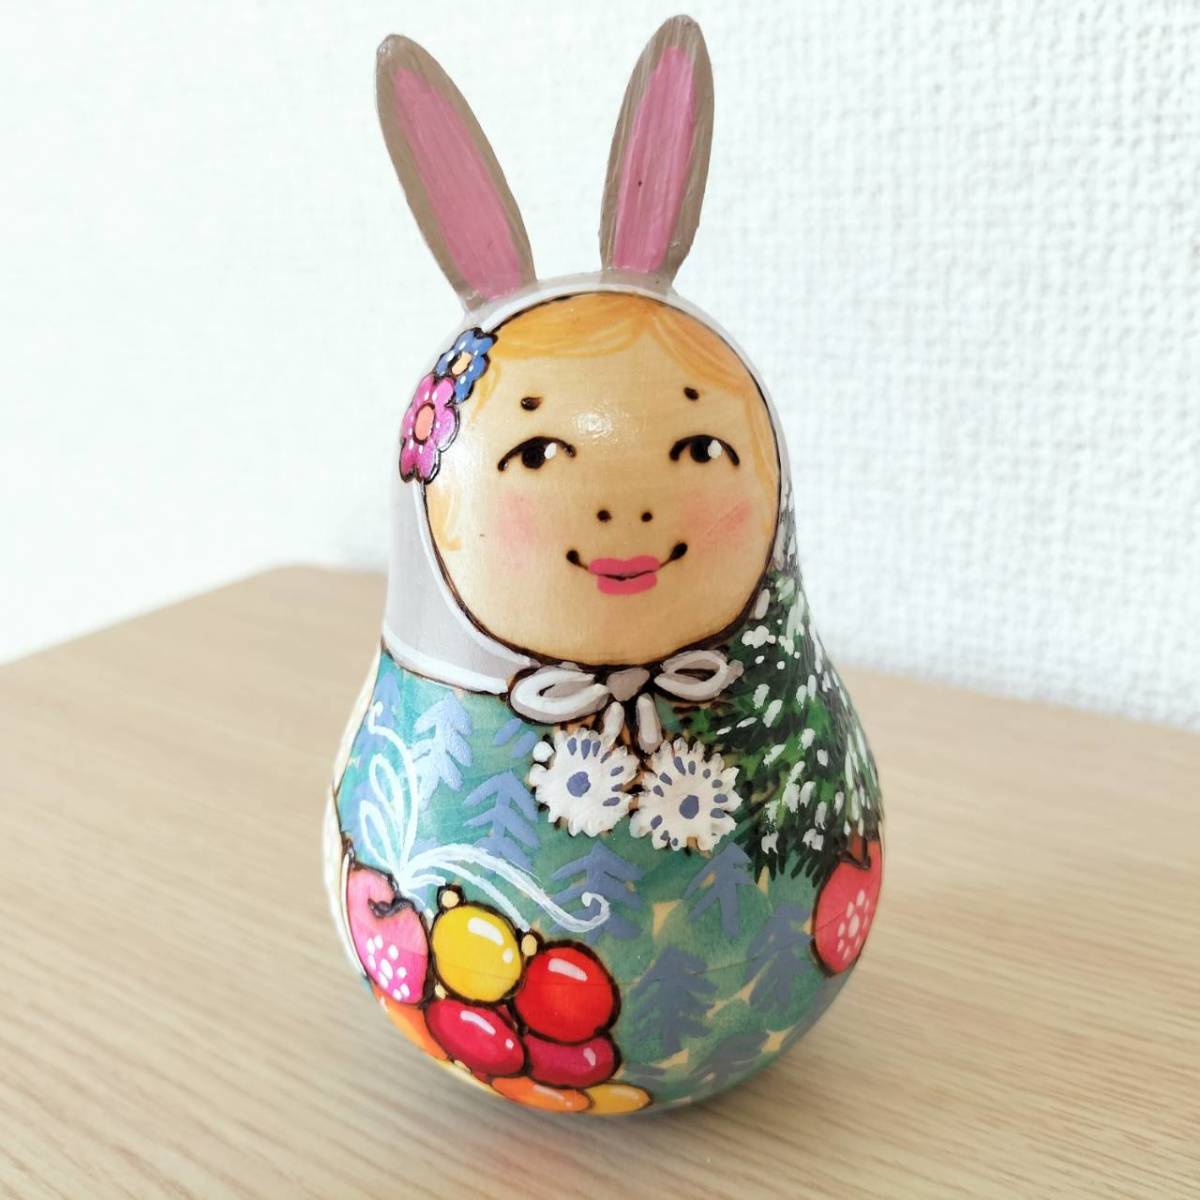 [DU004] Nordic Russian goods, Dubinich Tumbler Rabbit, Handmade items, interior, miscellaneous goods, ornament, object